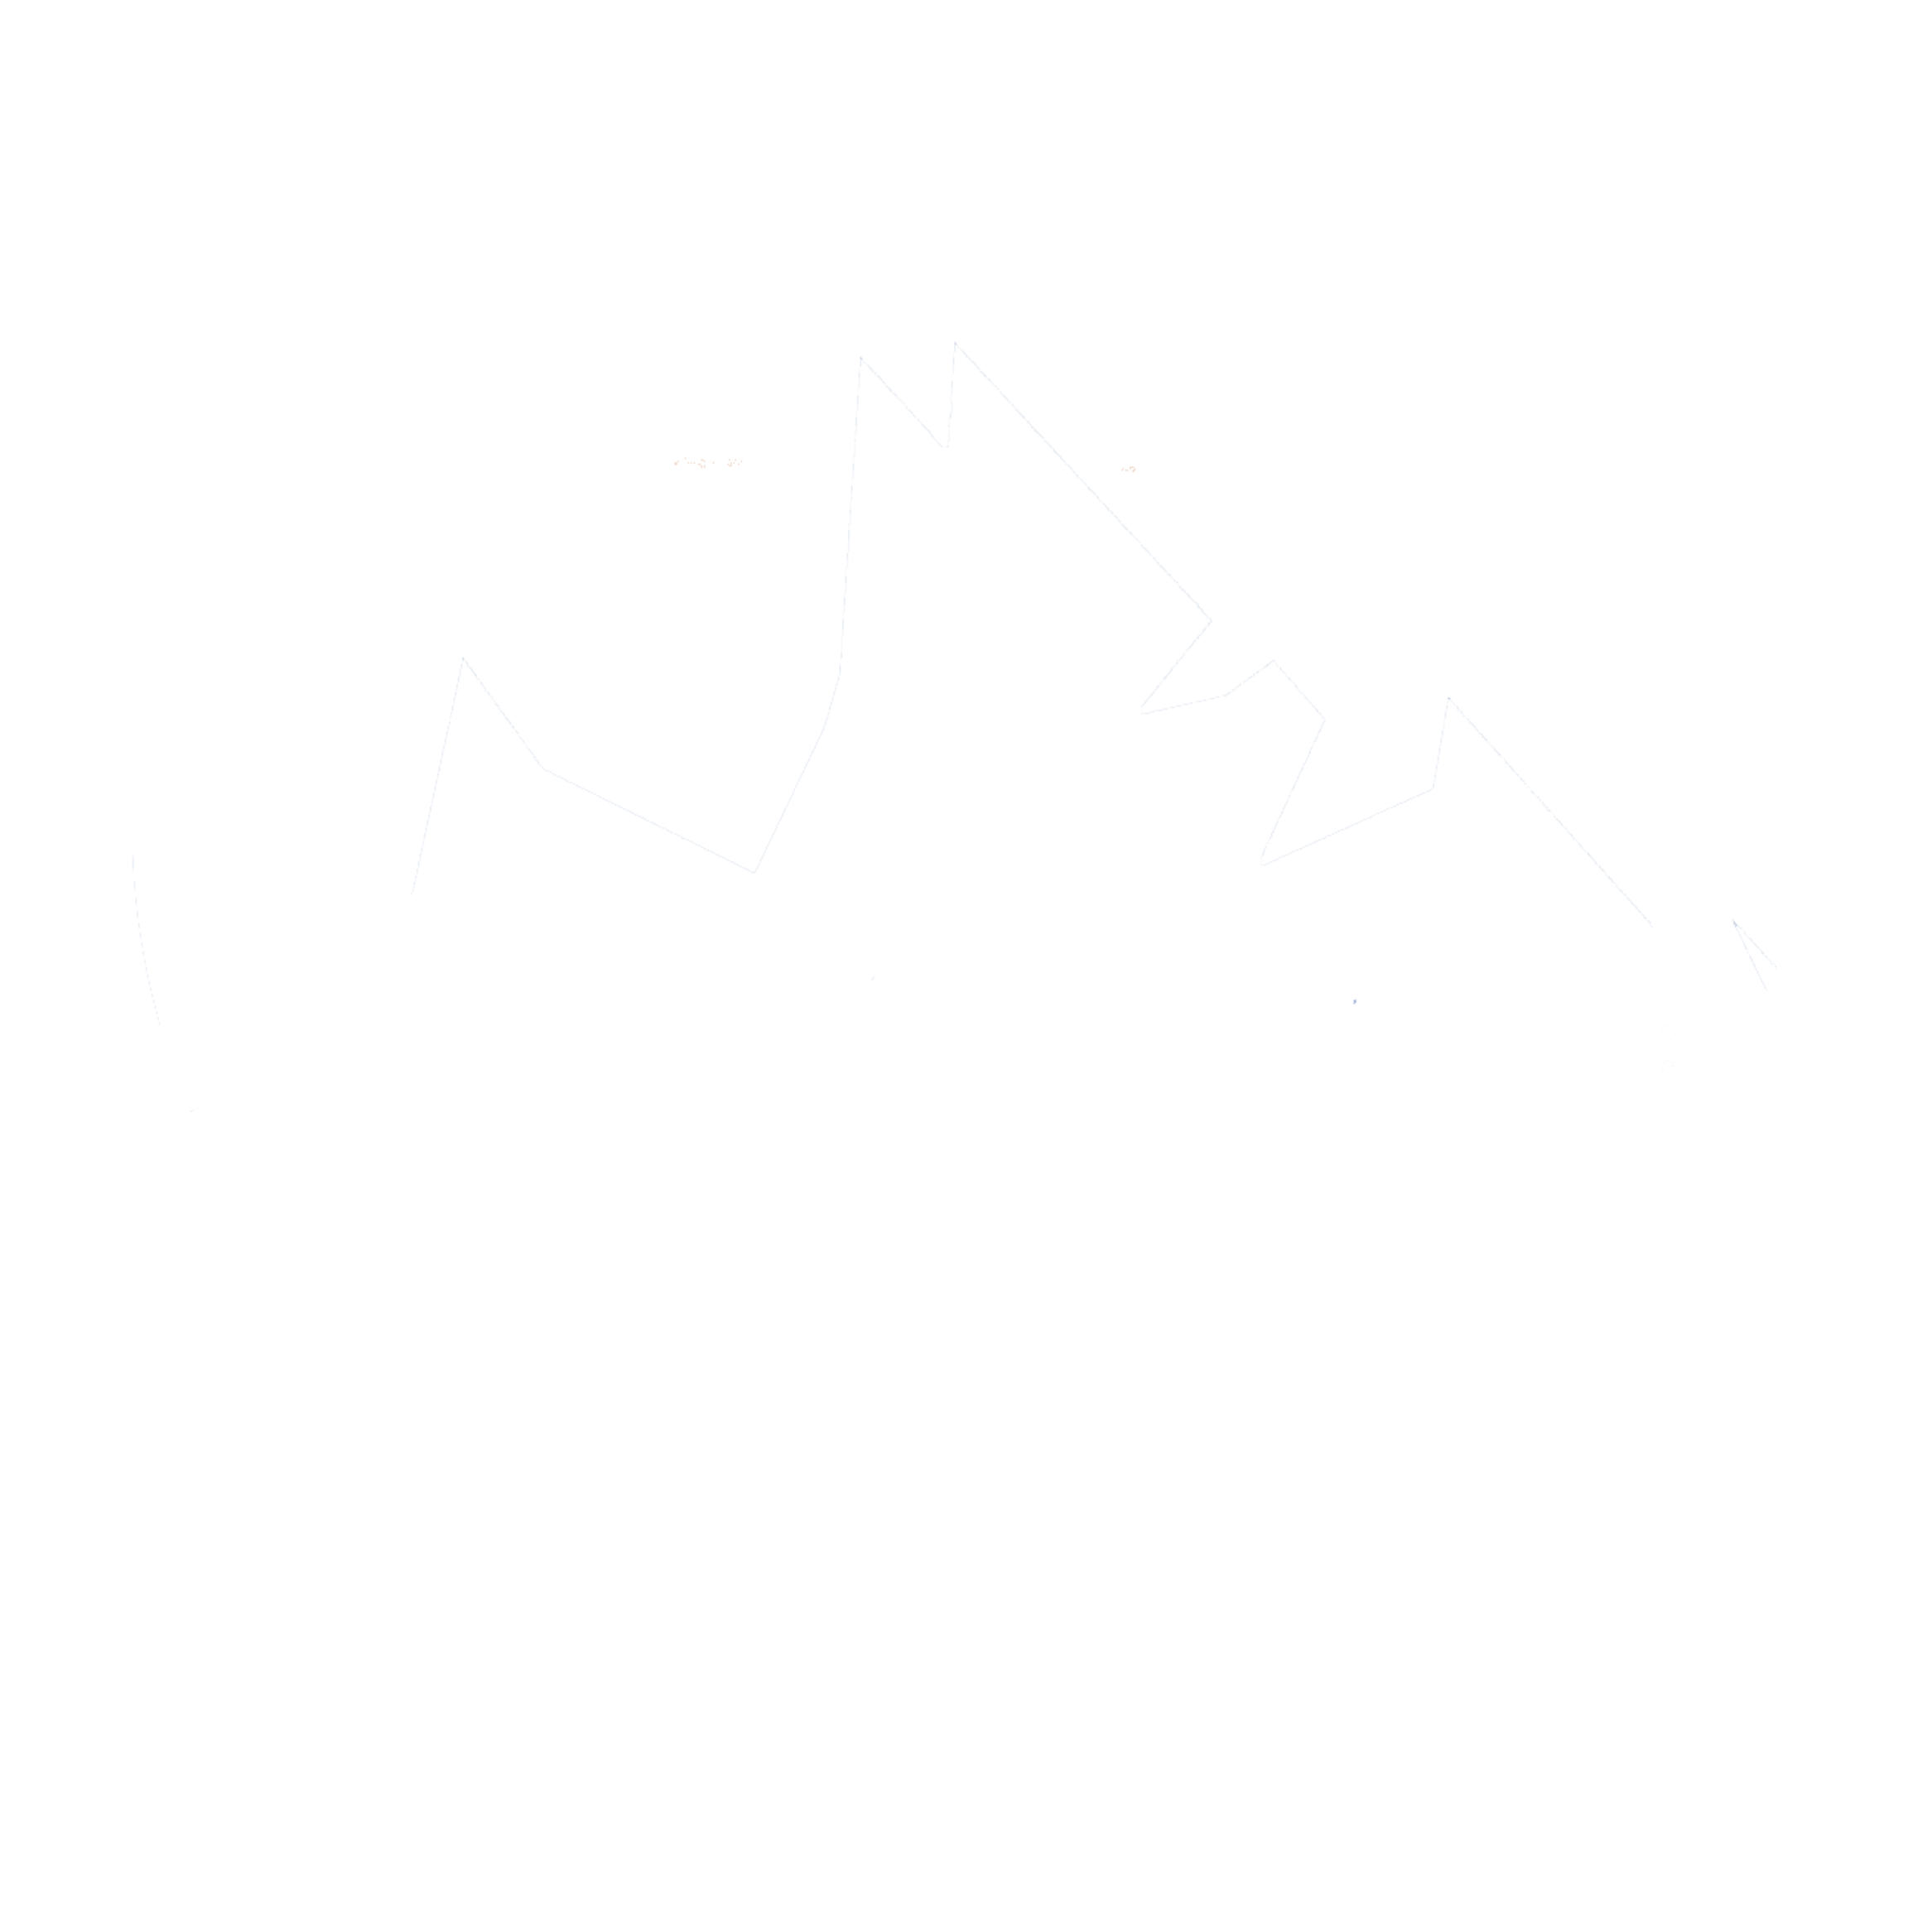 The Vyas Retreat